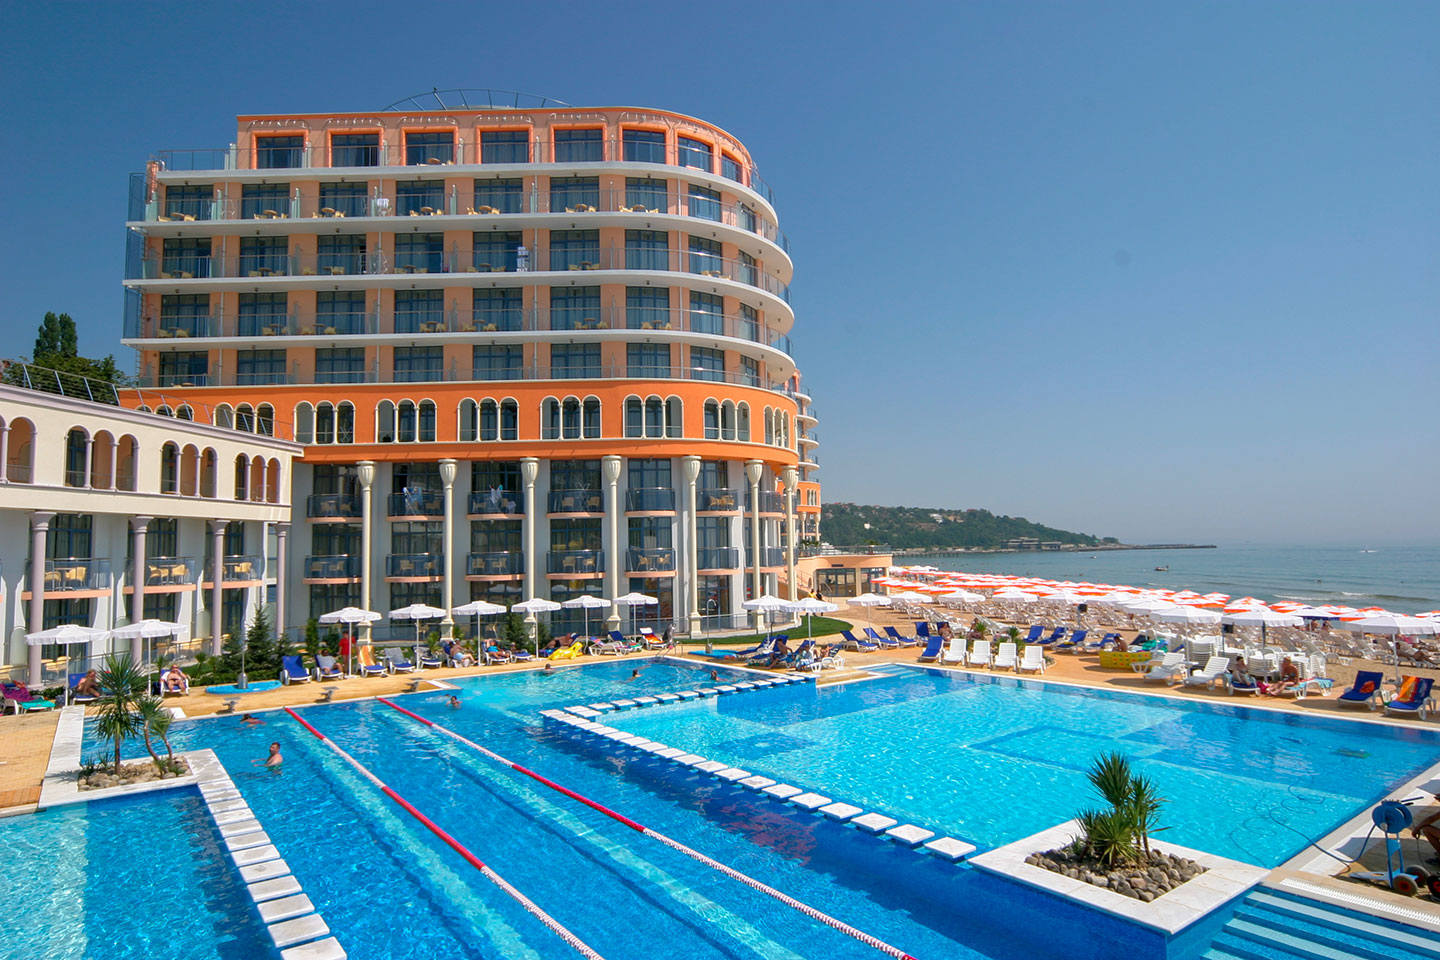 Water park and indoor pool - hotel "Azalia" - St. St. Constantine and Helena, Bulgaria